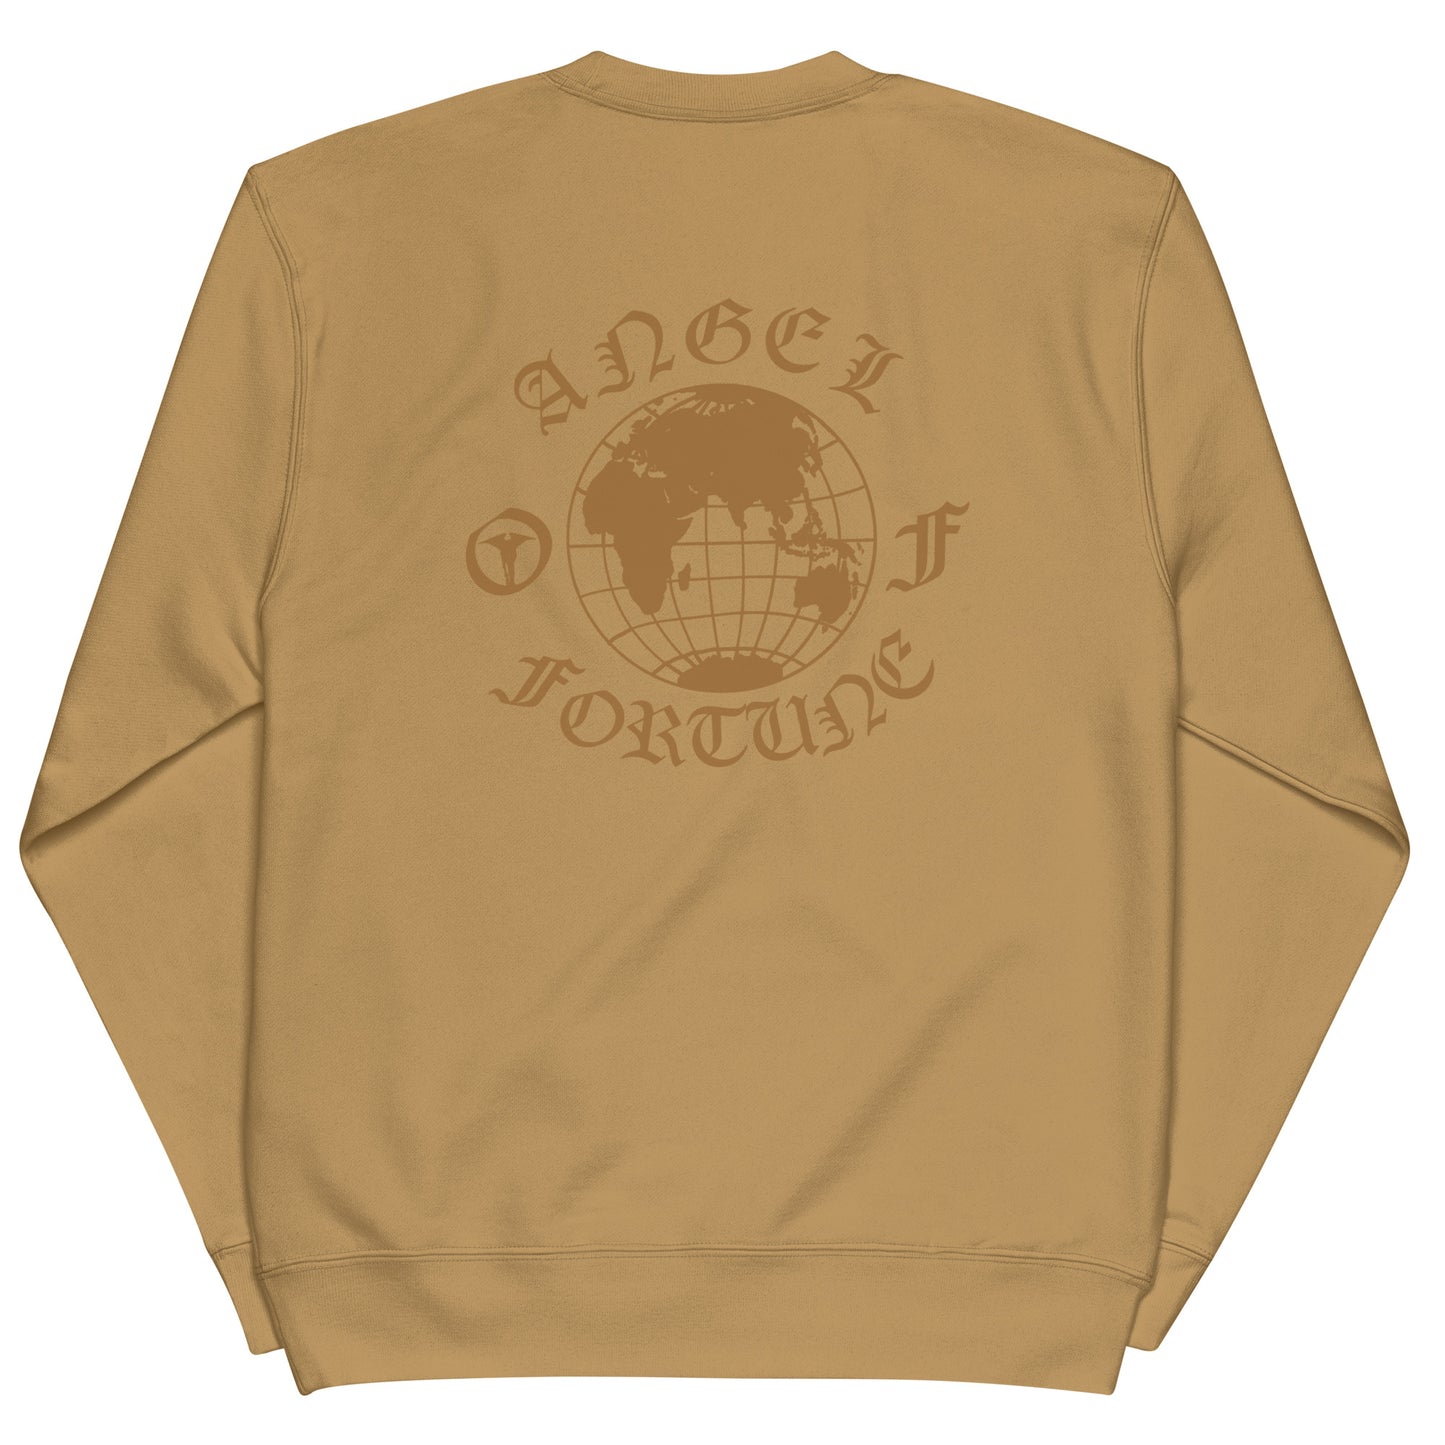 Gold Angel Money bag - Unisex french terry 100% Cotton sweatshirt